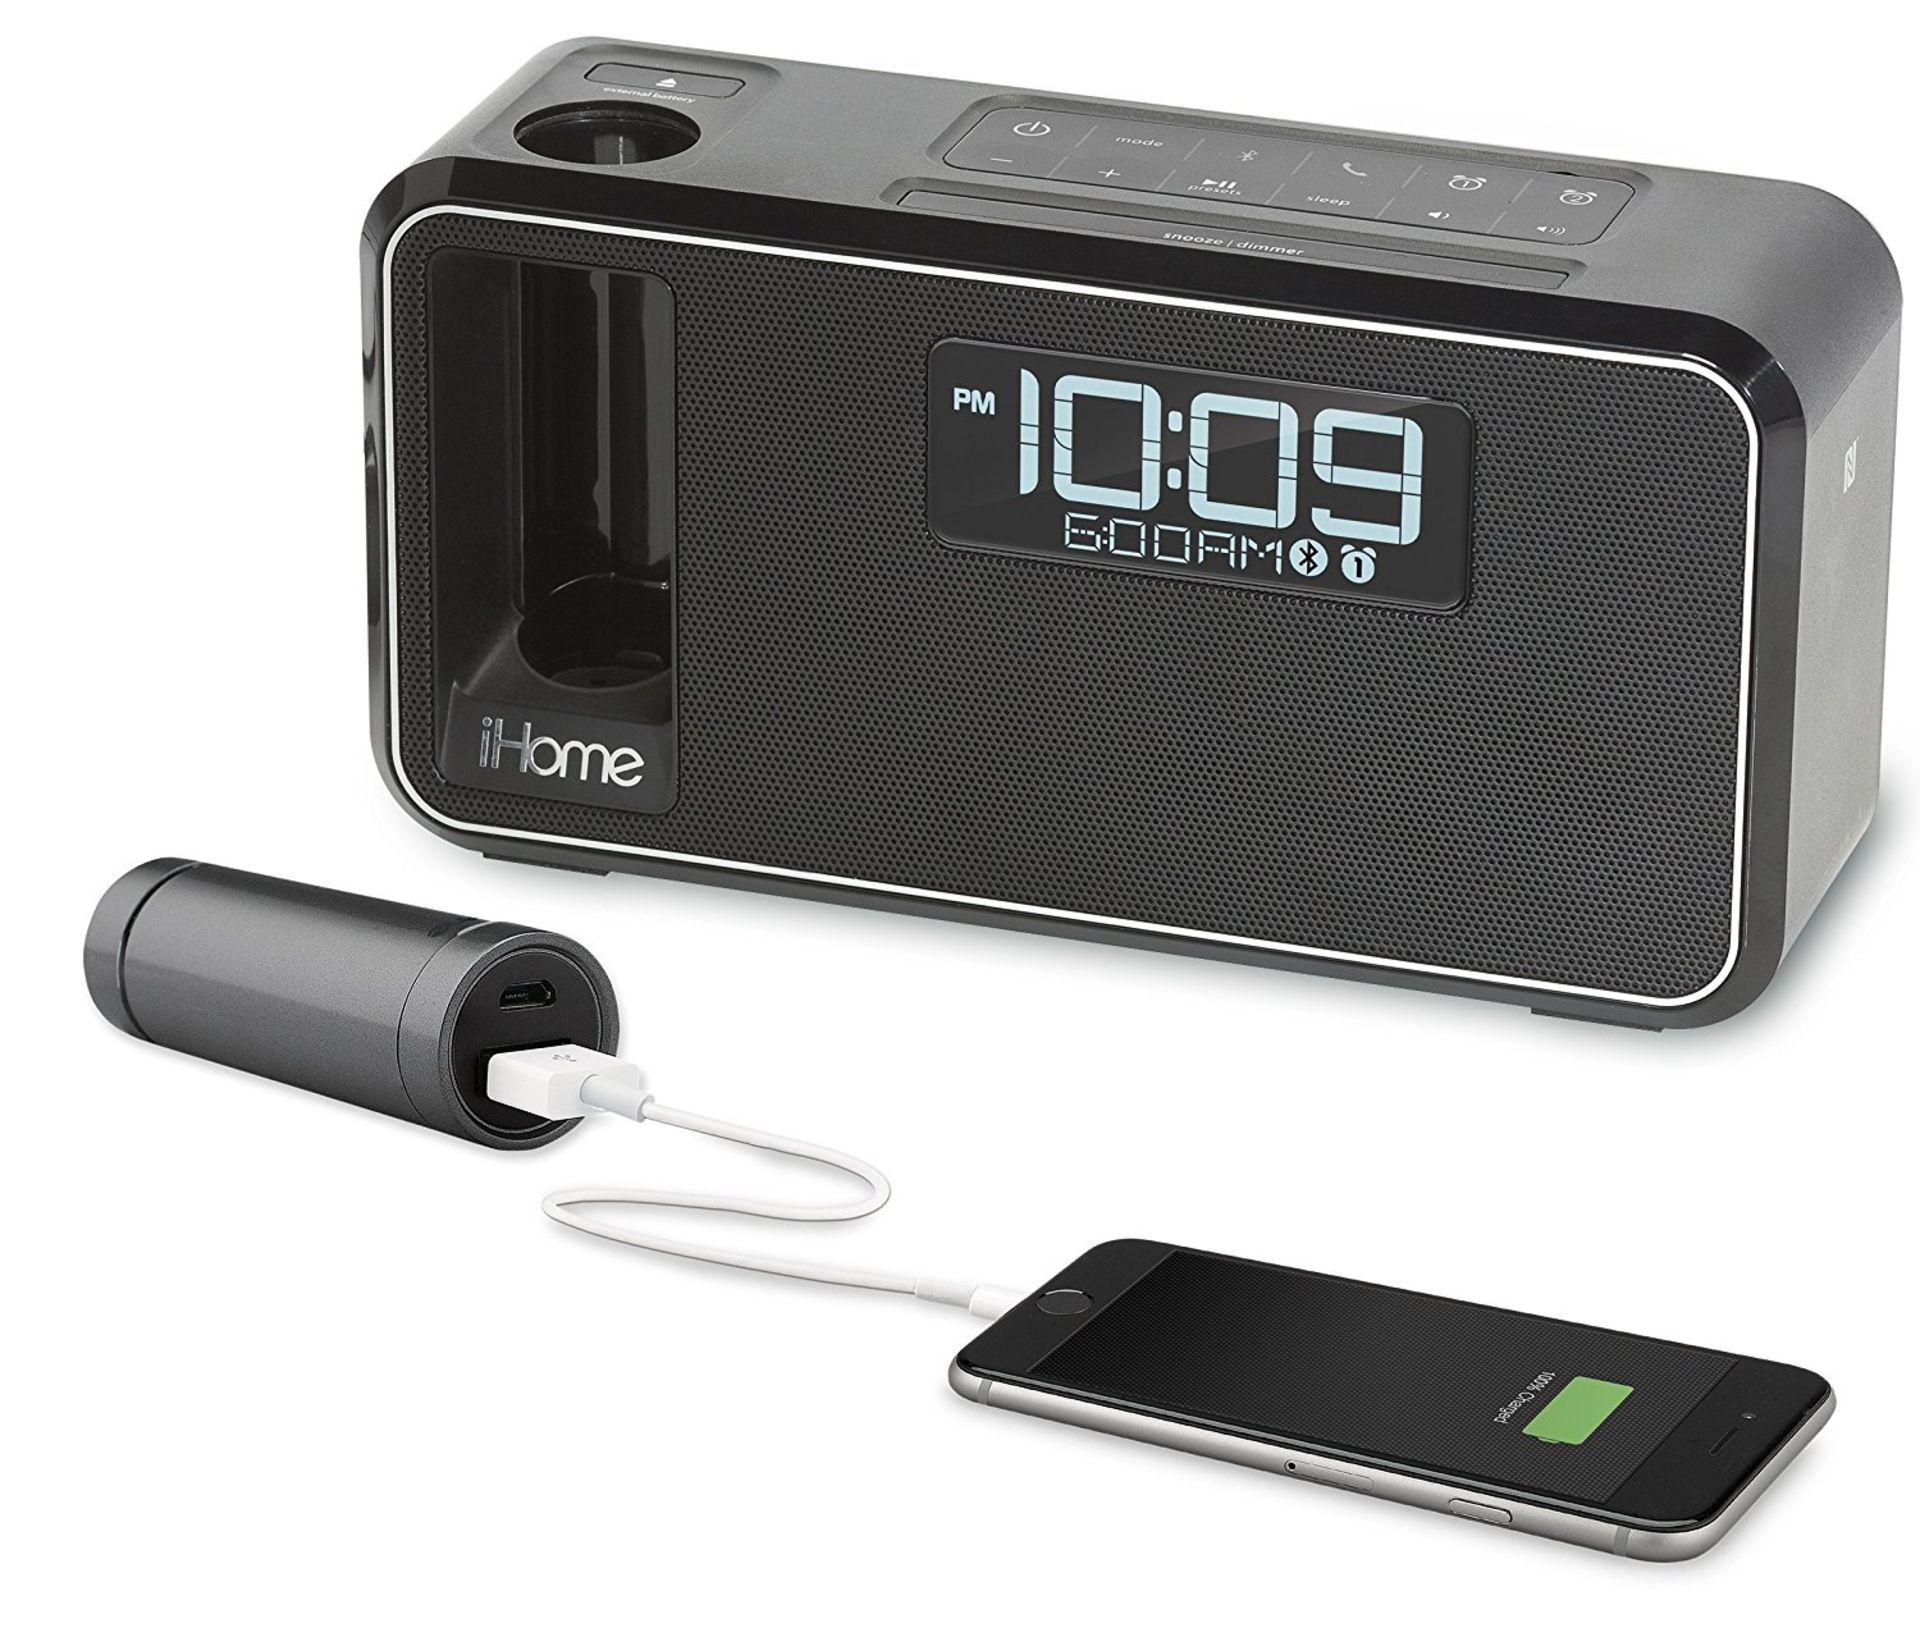 V *TRADE QTY* Brand New IHome Dual Charging Bluetooth Stereo Alarm Clock Radio/Speakerphone - - Image 2 of 2